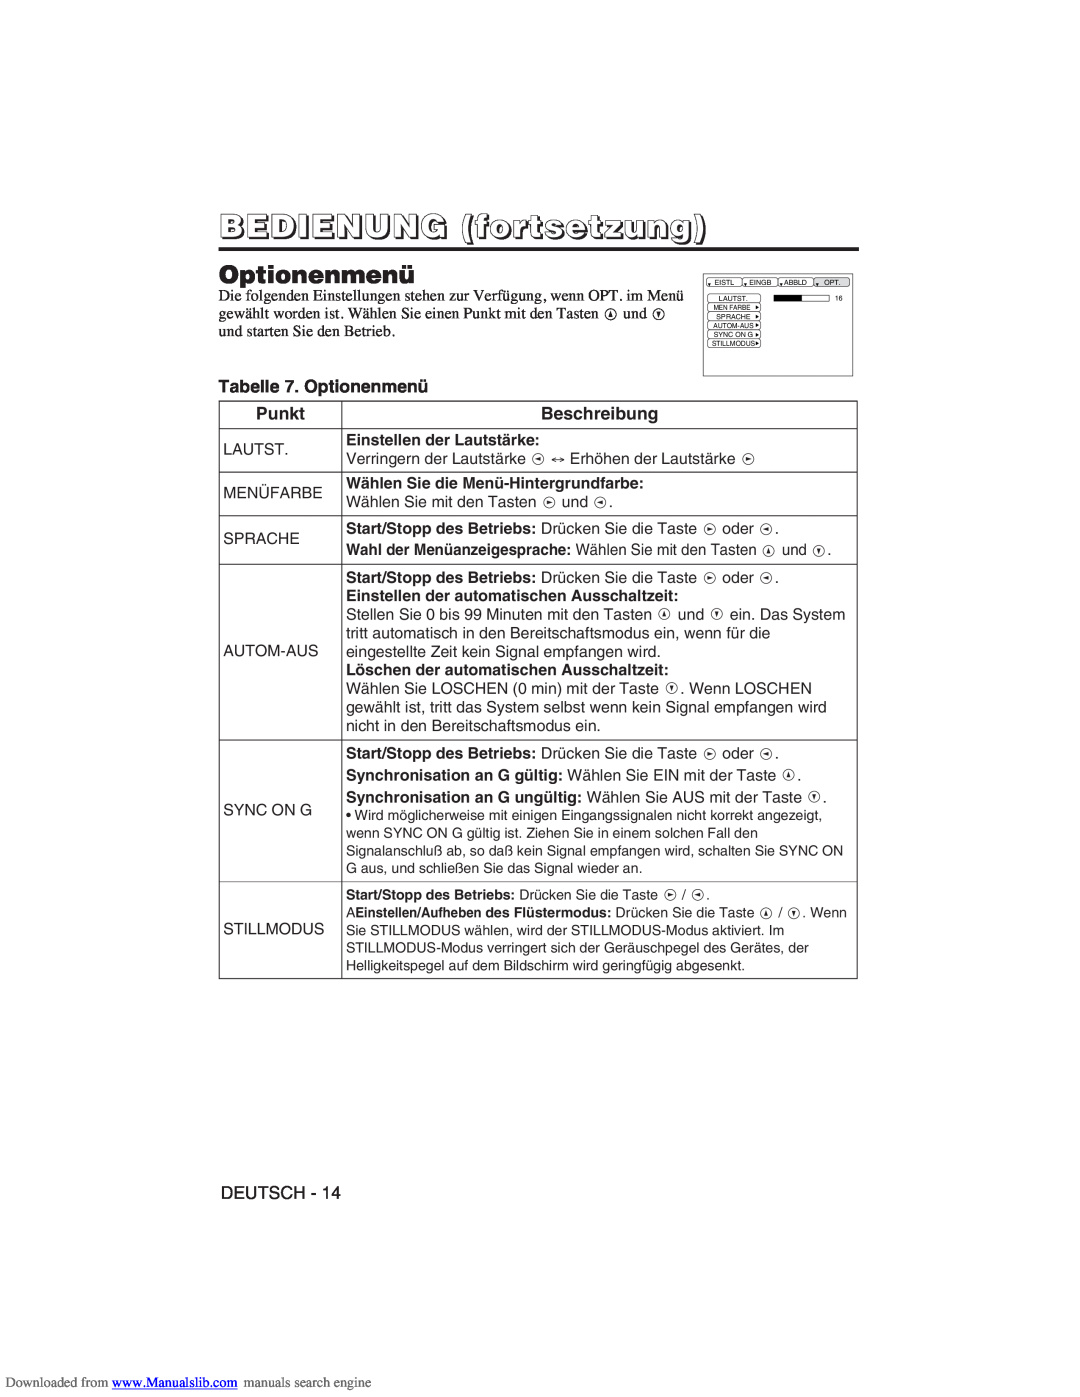 Hitachi CP-X275W user manual Tabelle 7. Optionenmenü, BEDIENUNG fortsetzung, Punkt, Beschreibung 